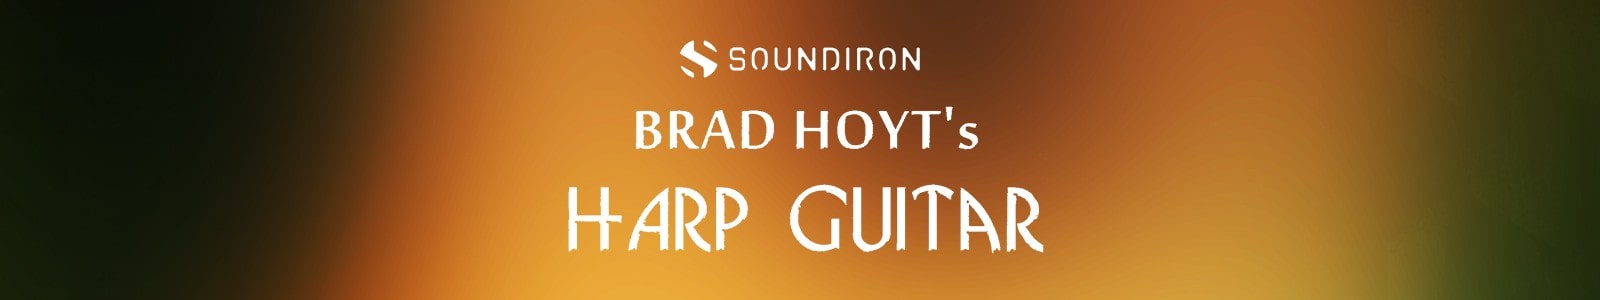 Brad Hoyt’s Harp Guitar by Soundiron